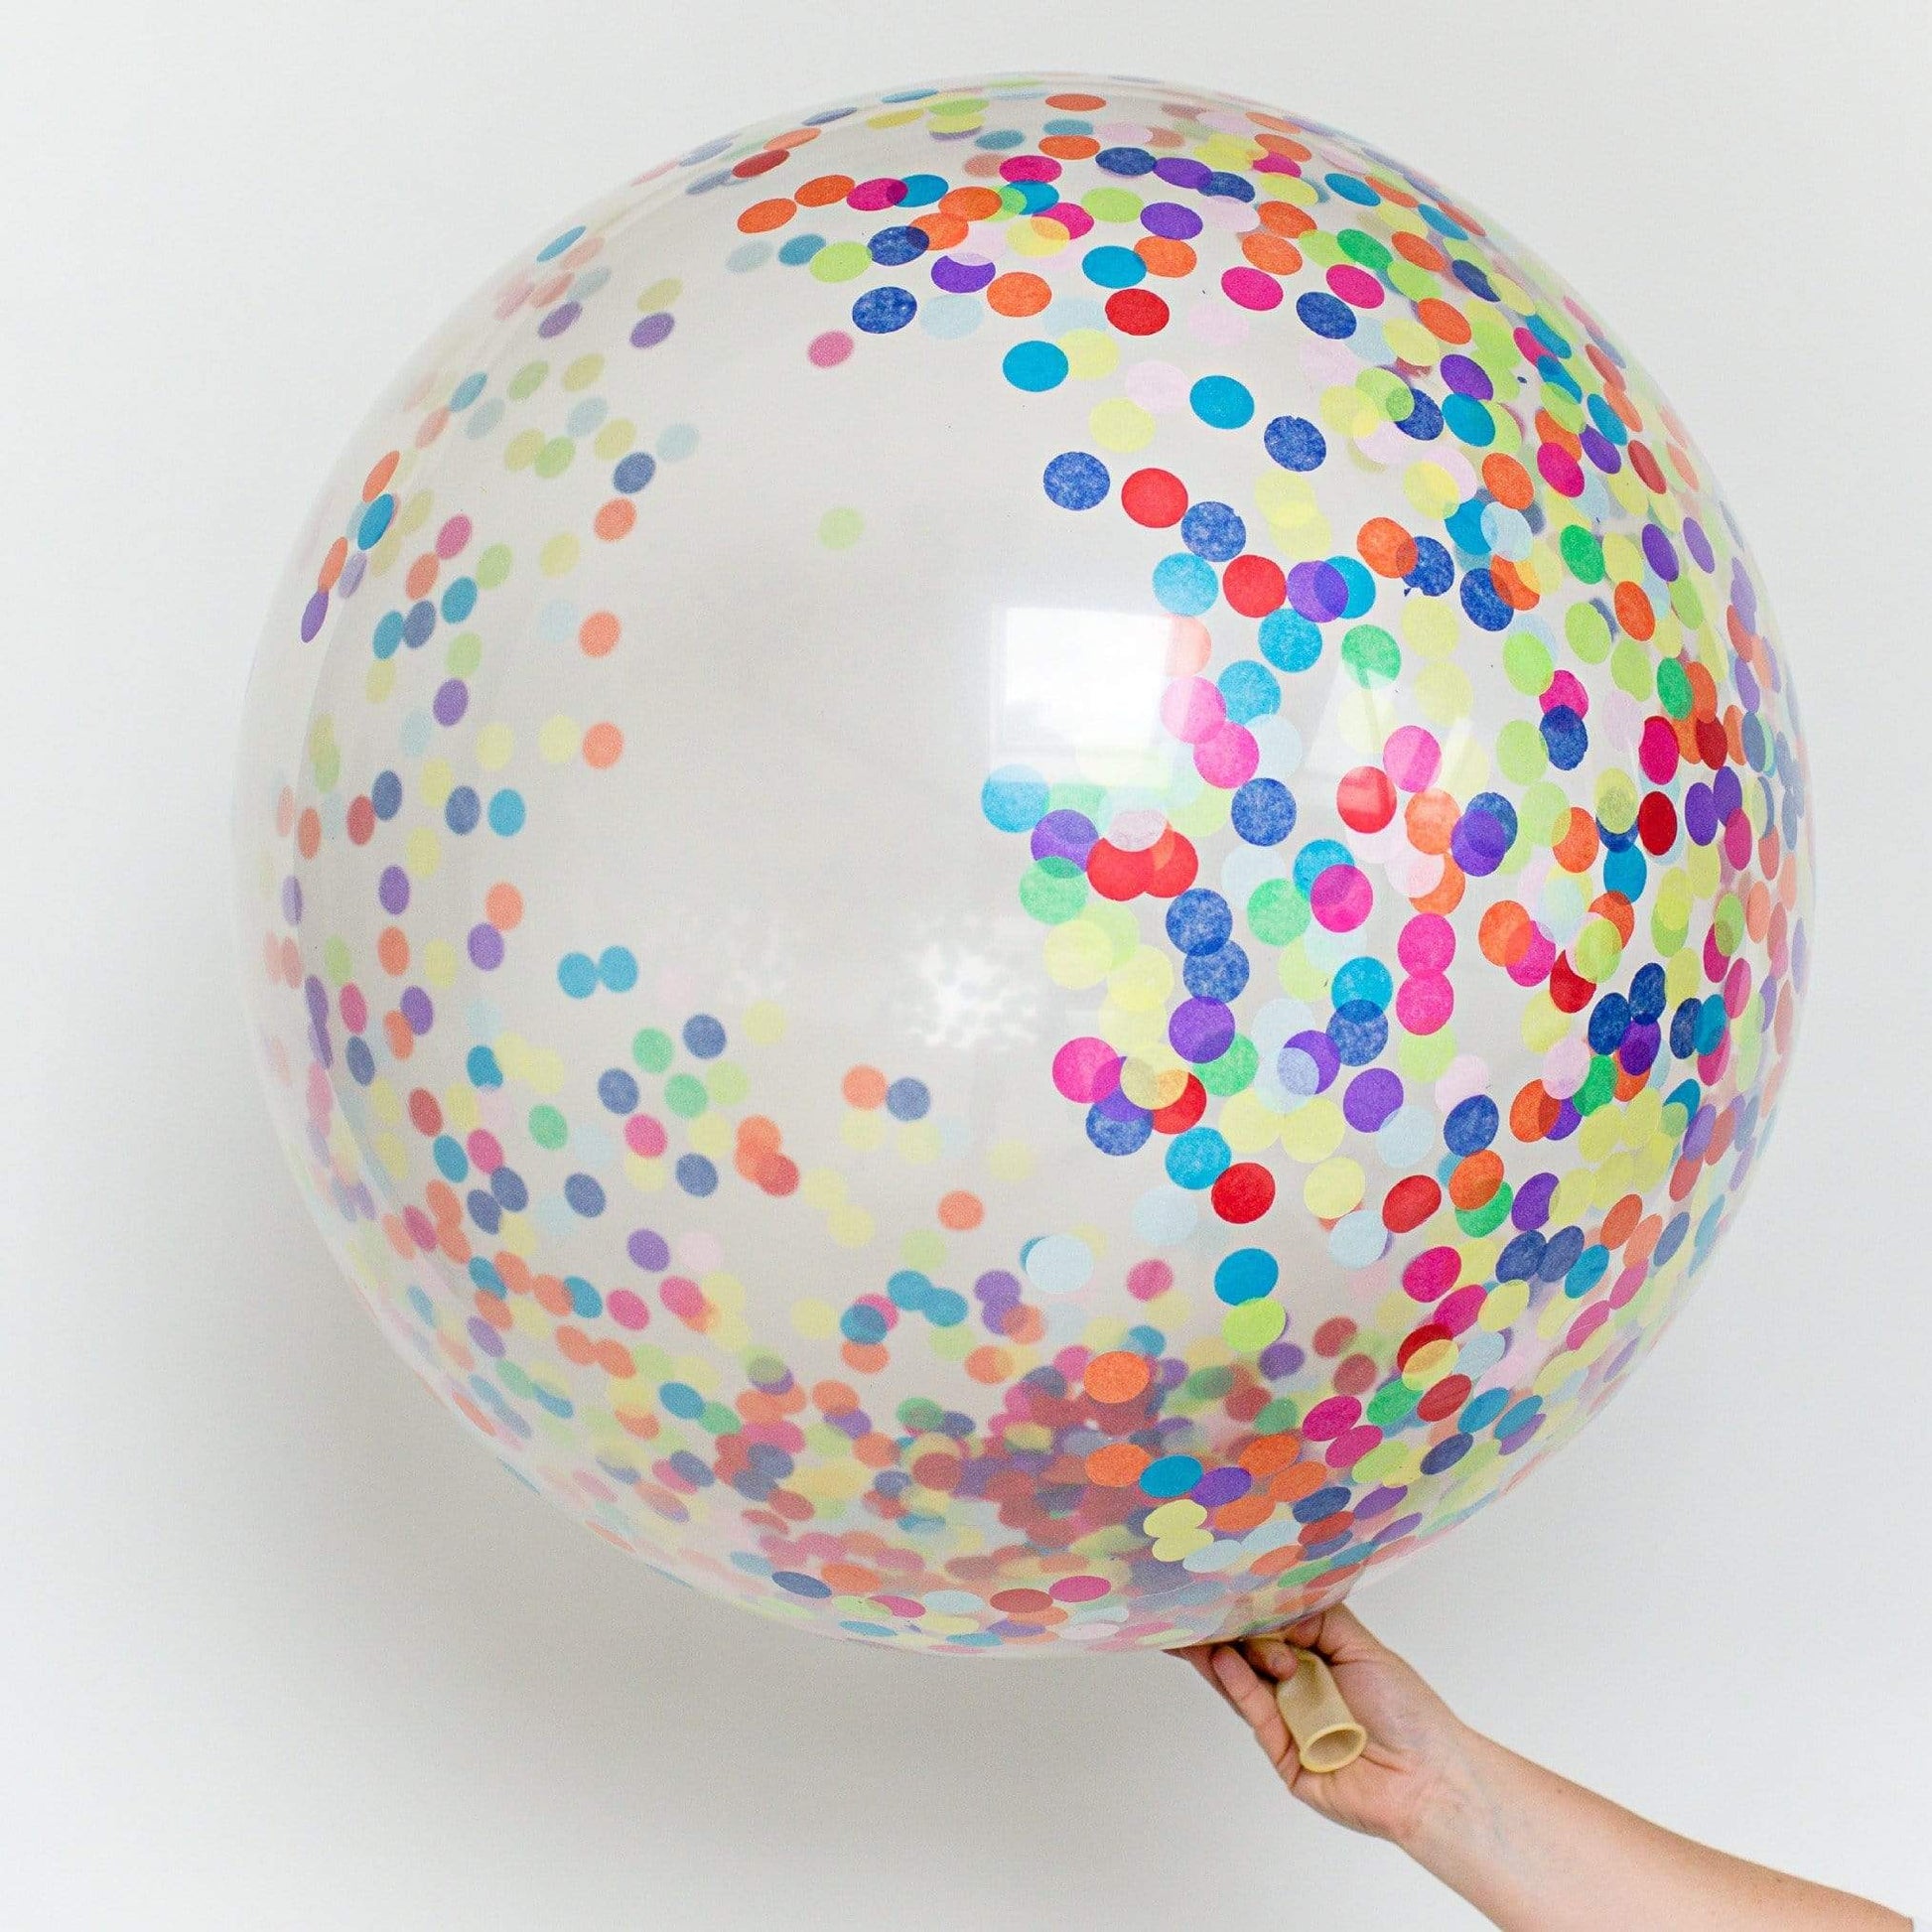 Confetti Balloons | Rainbow Confetti Filled Balloons UK Pretty Little Party Shop